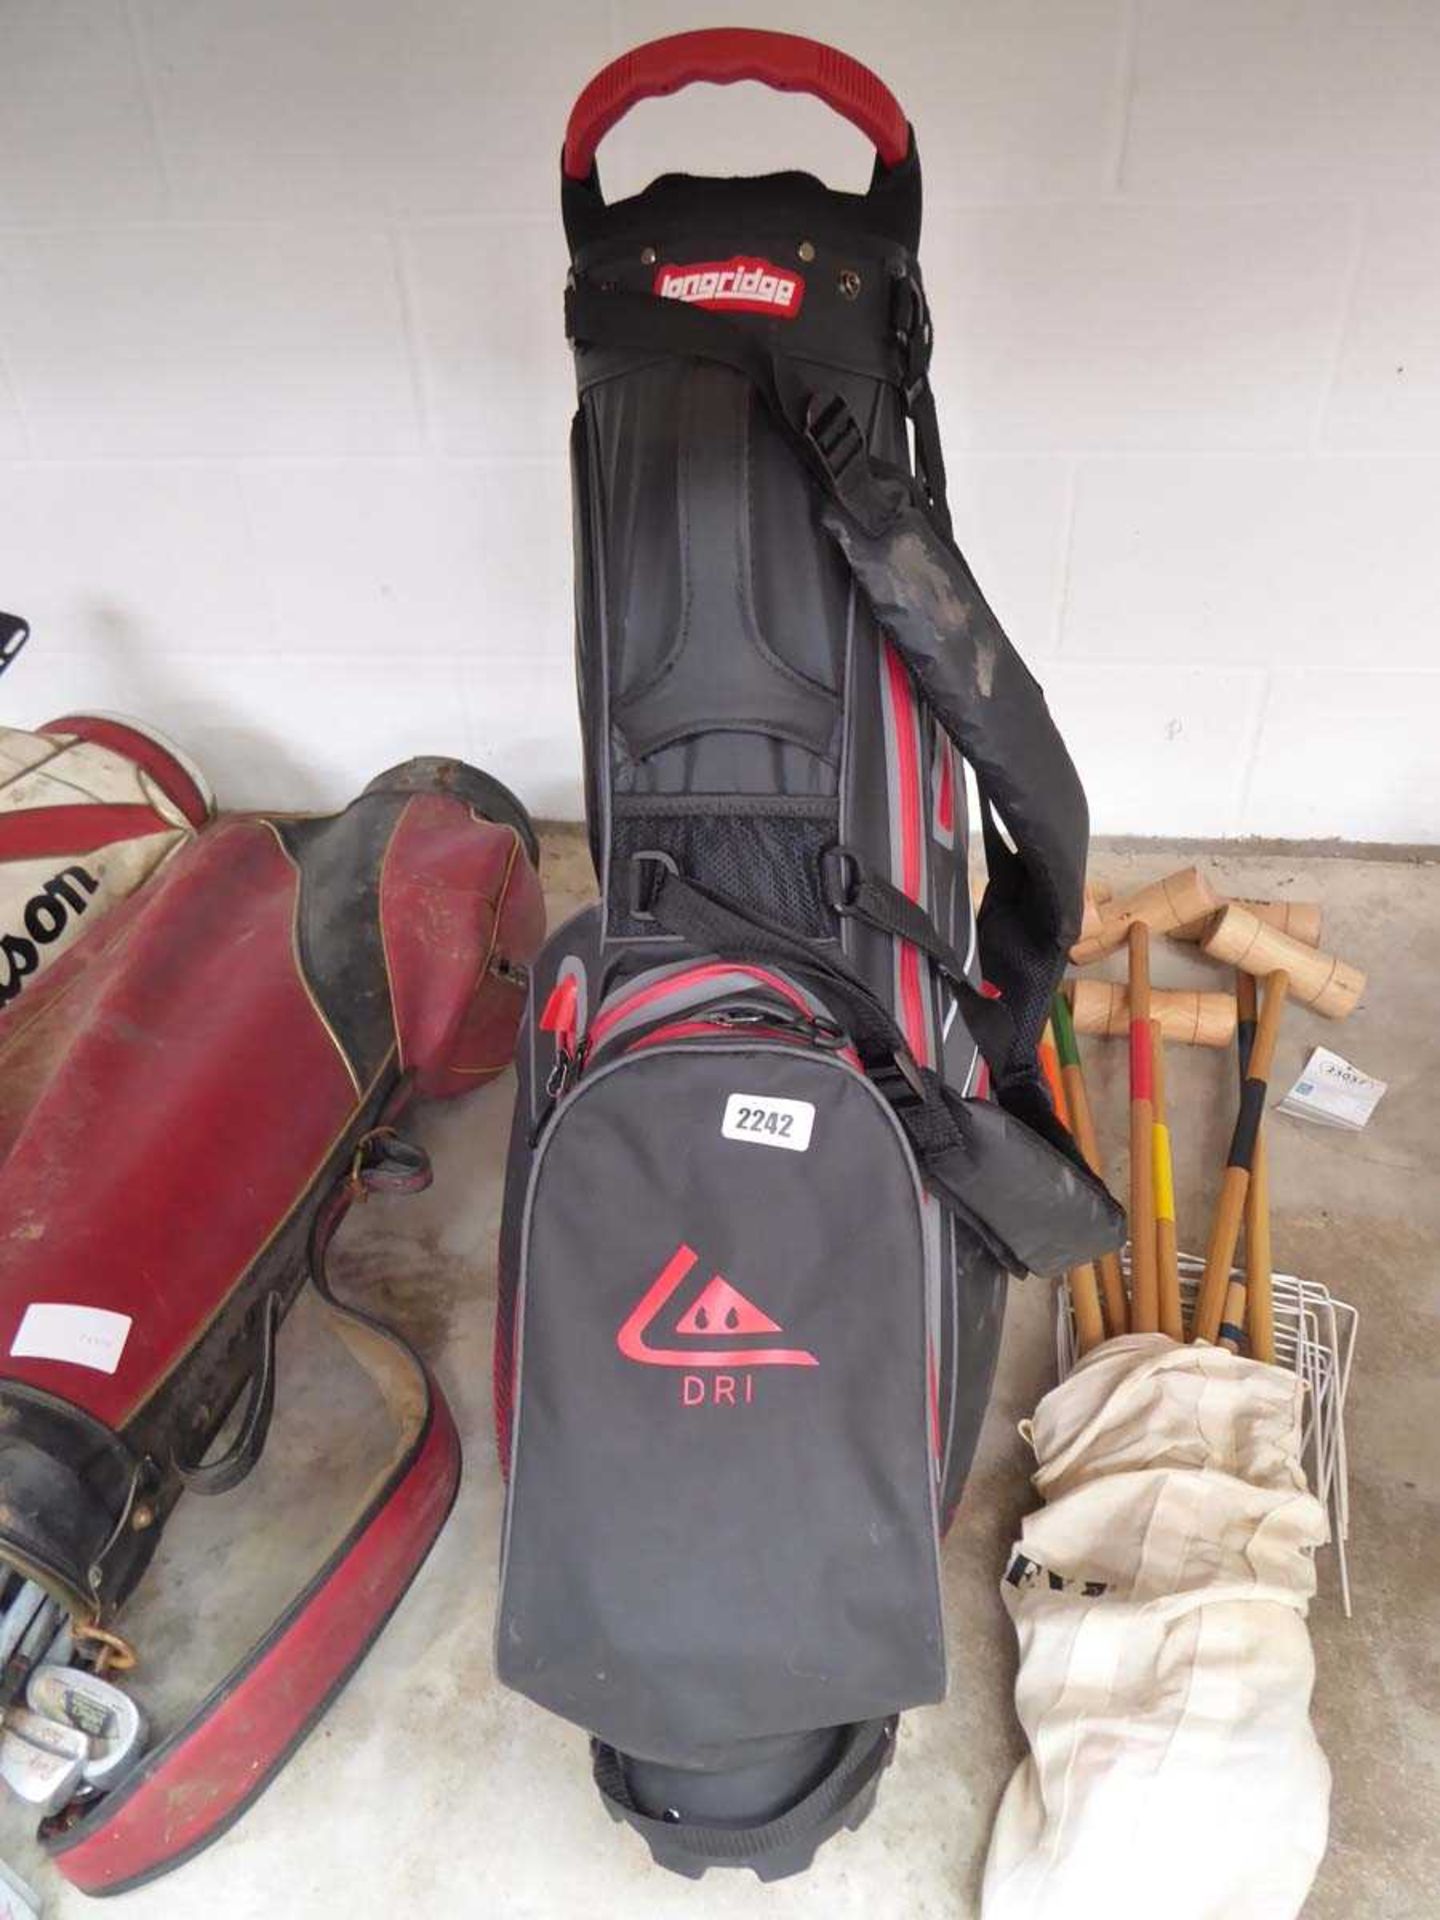 Longridge black and red golf bag (no clubs)